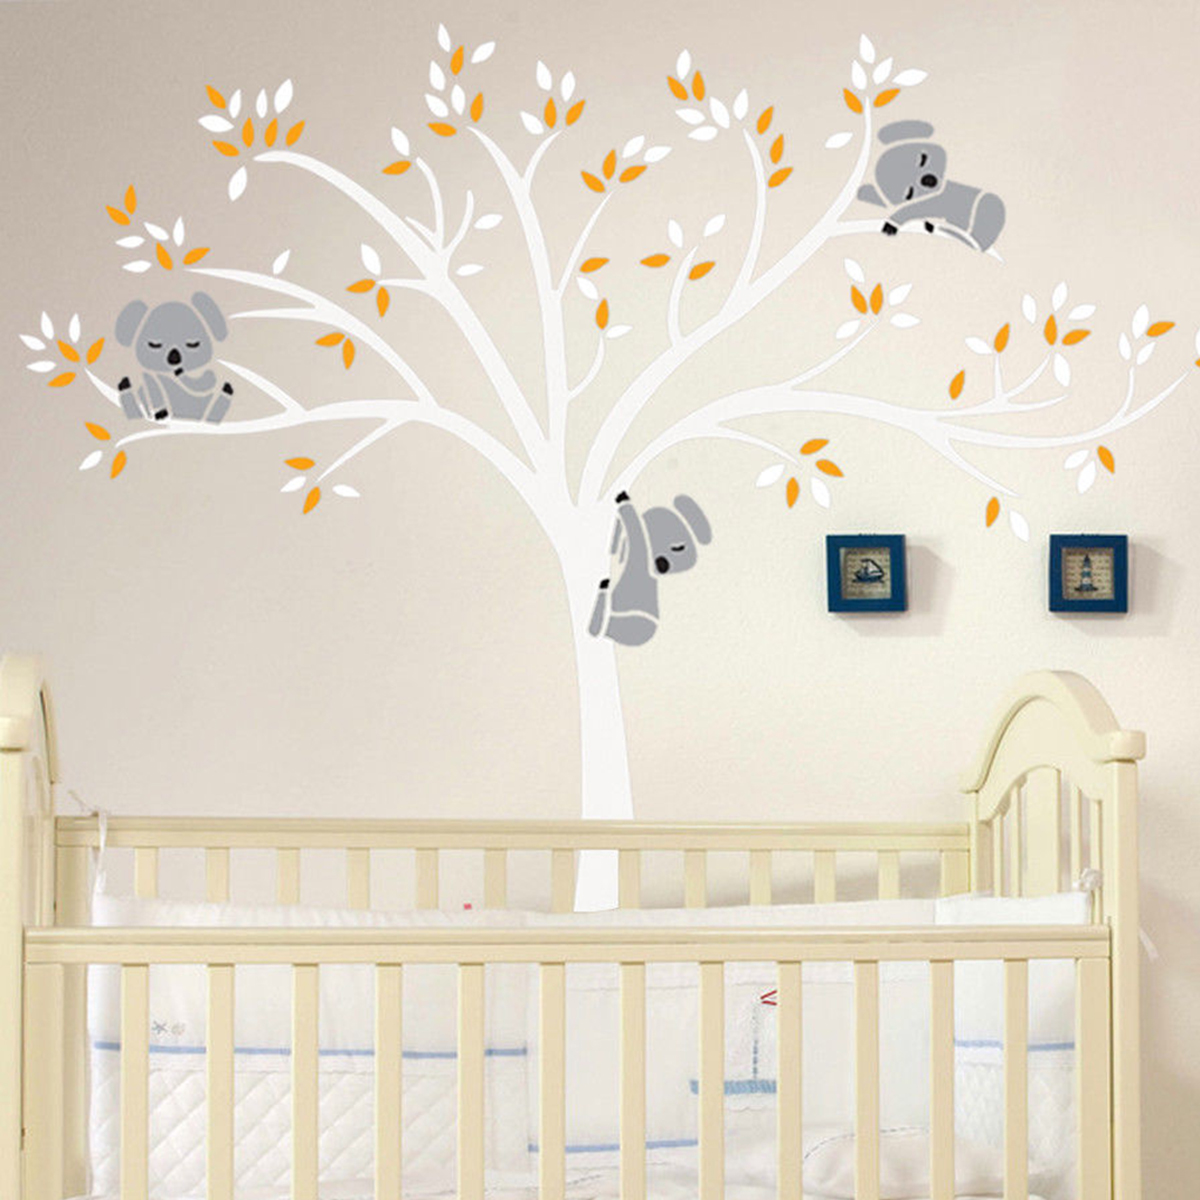 

Removable Mural Koala Tree Wall Sticker Kids Decals Home Room Nursery